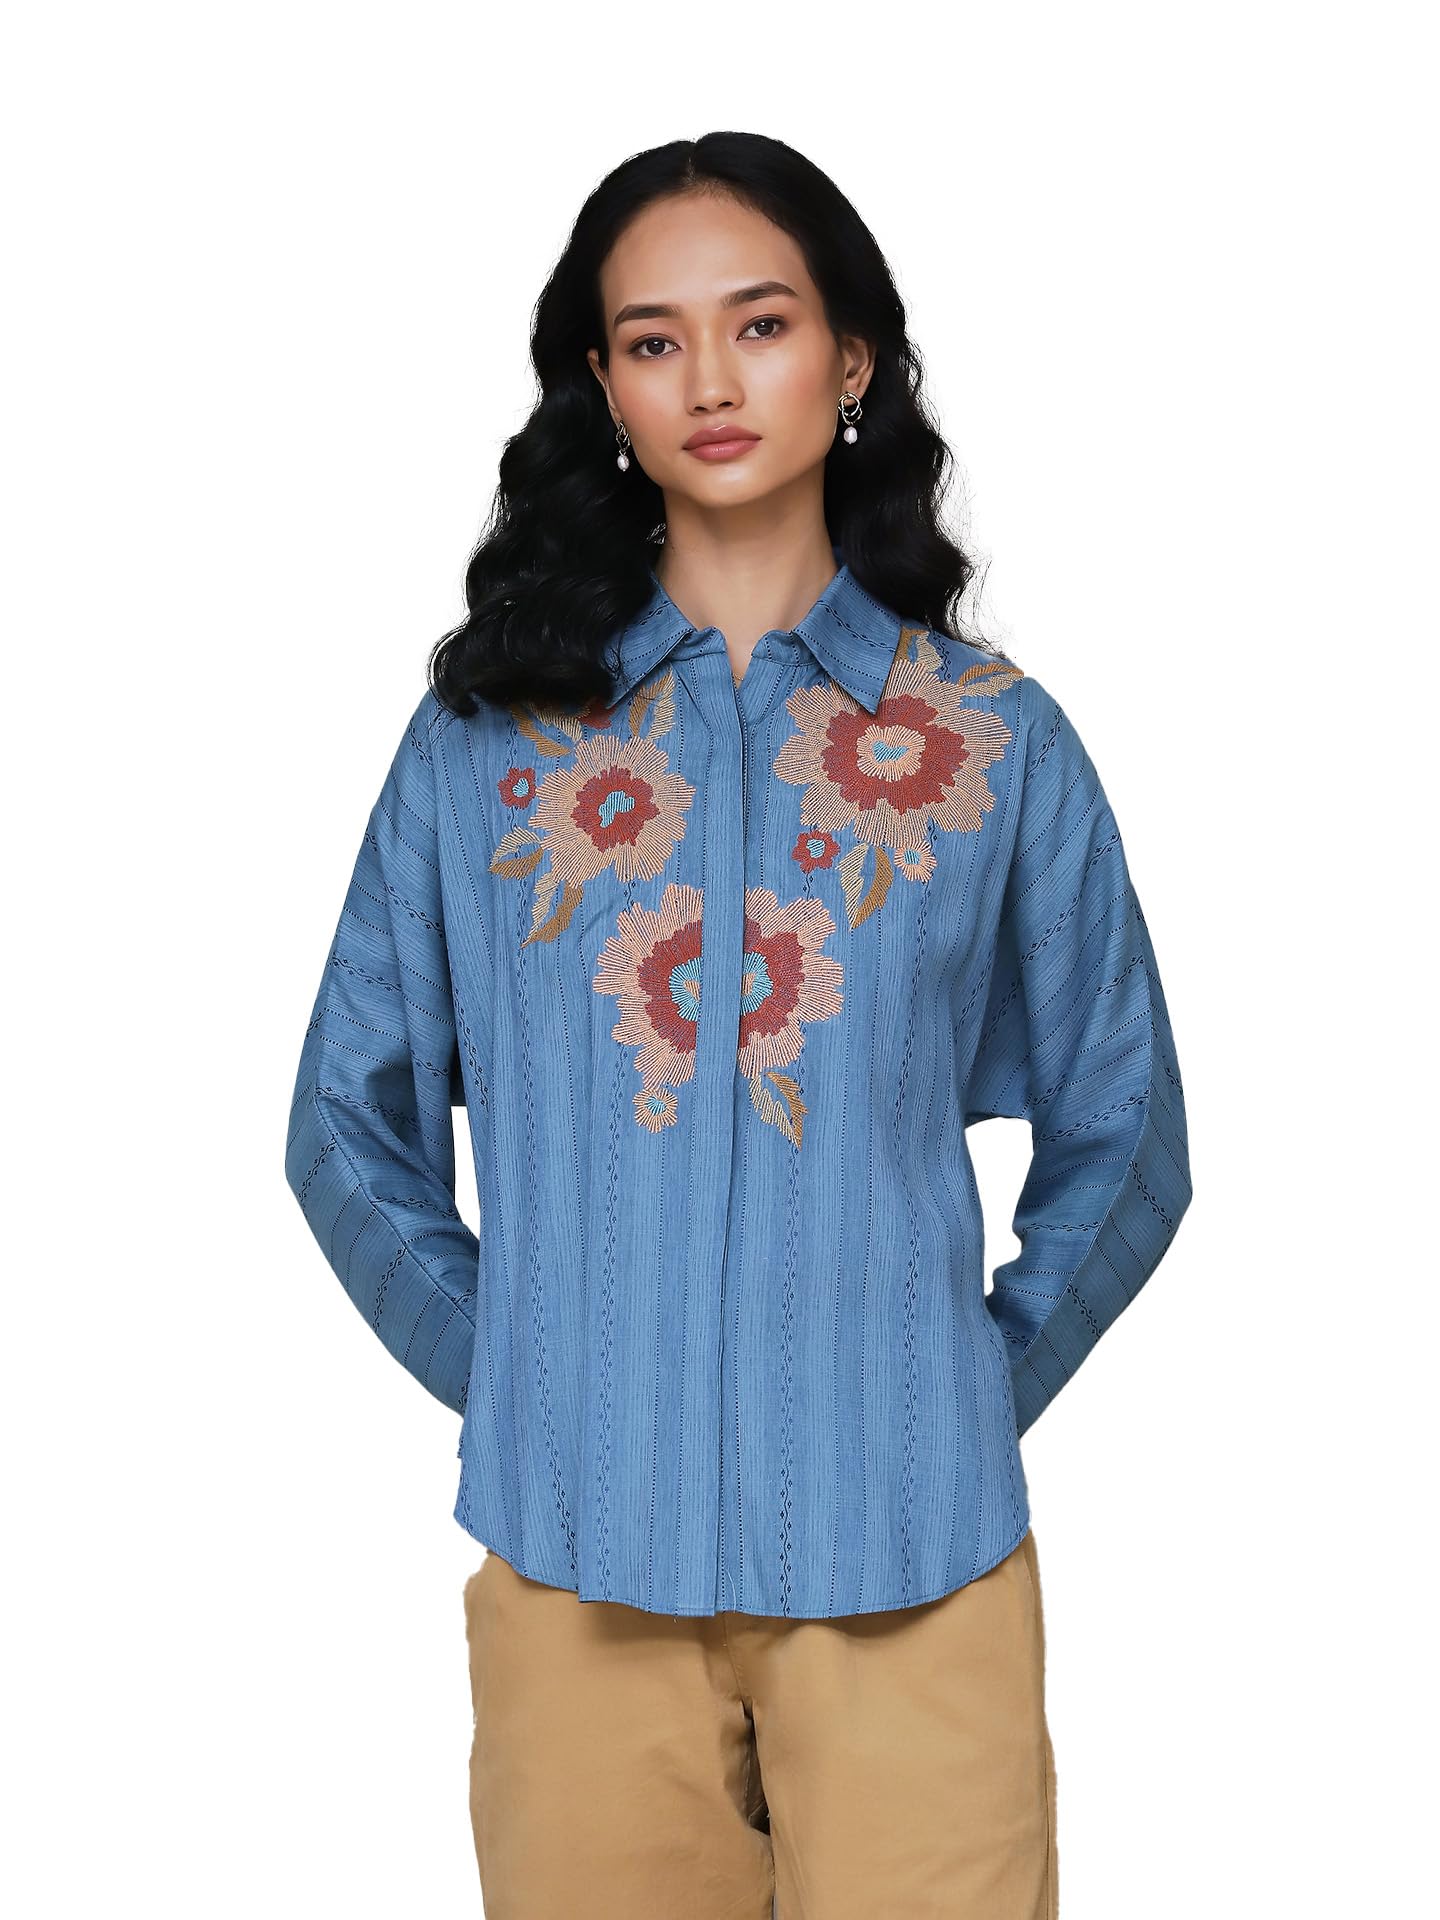 Aarke Ritu Kumar Blue Embroidered Shirt 